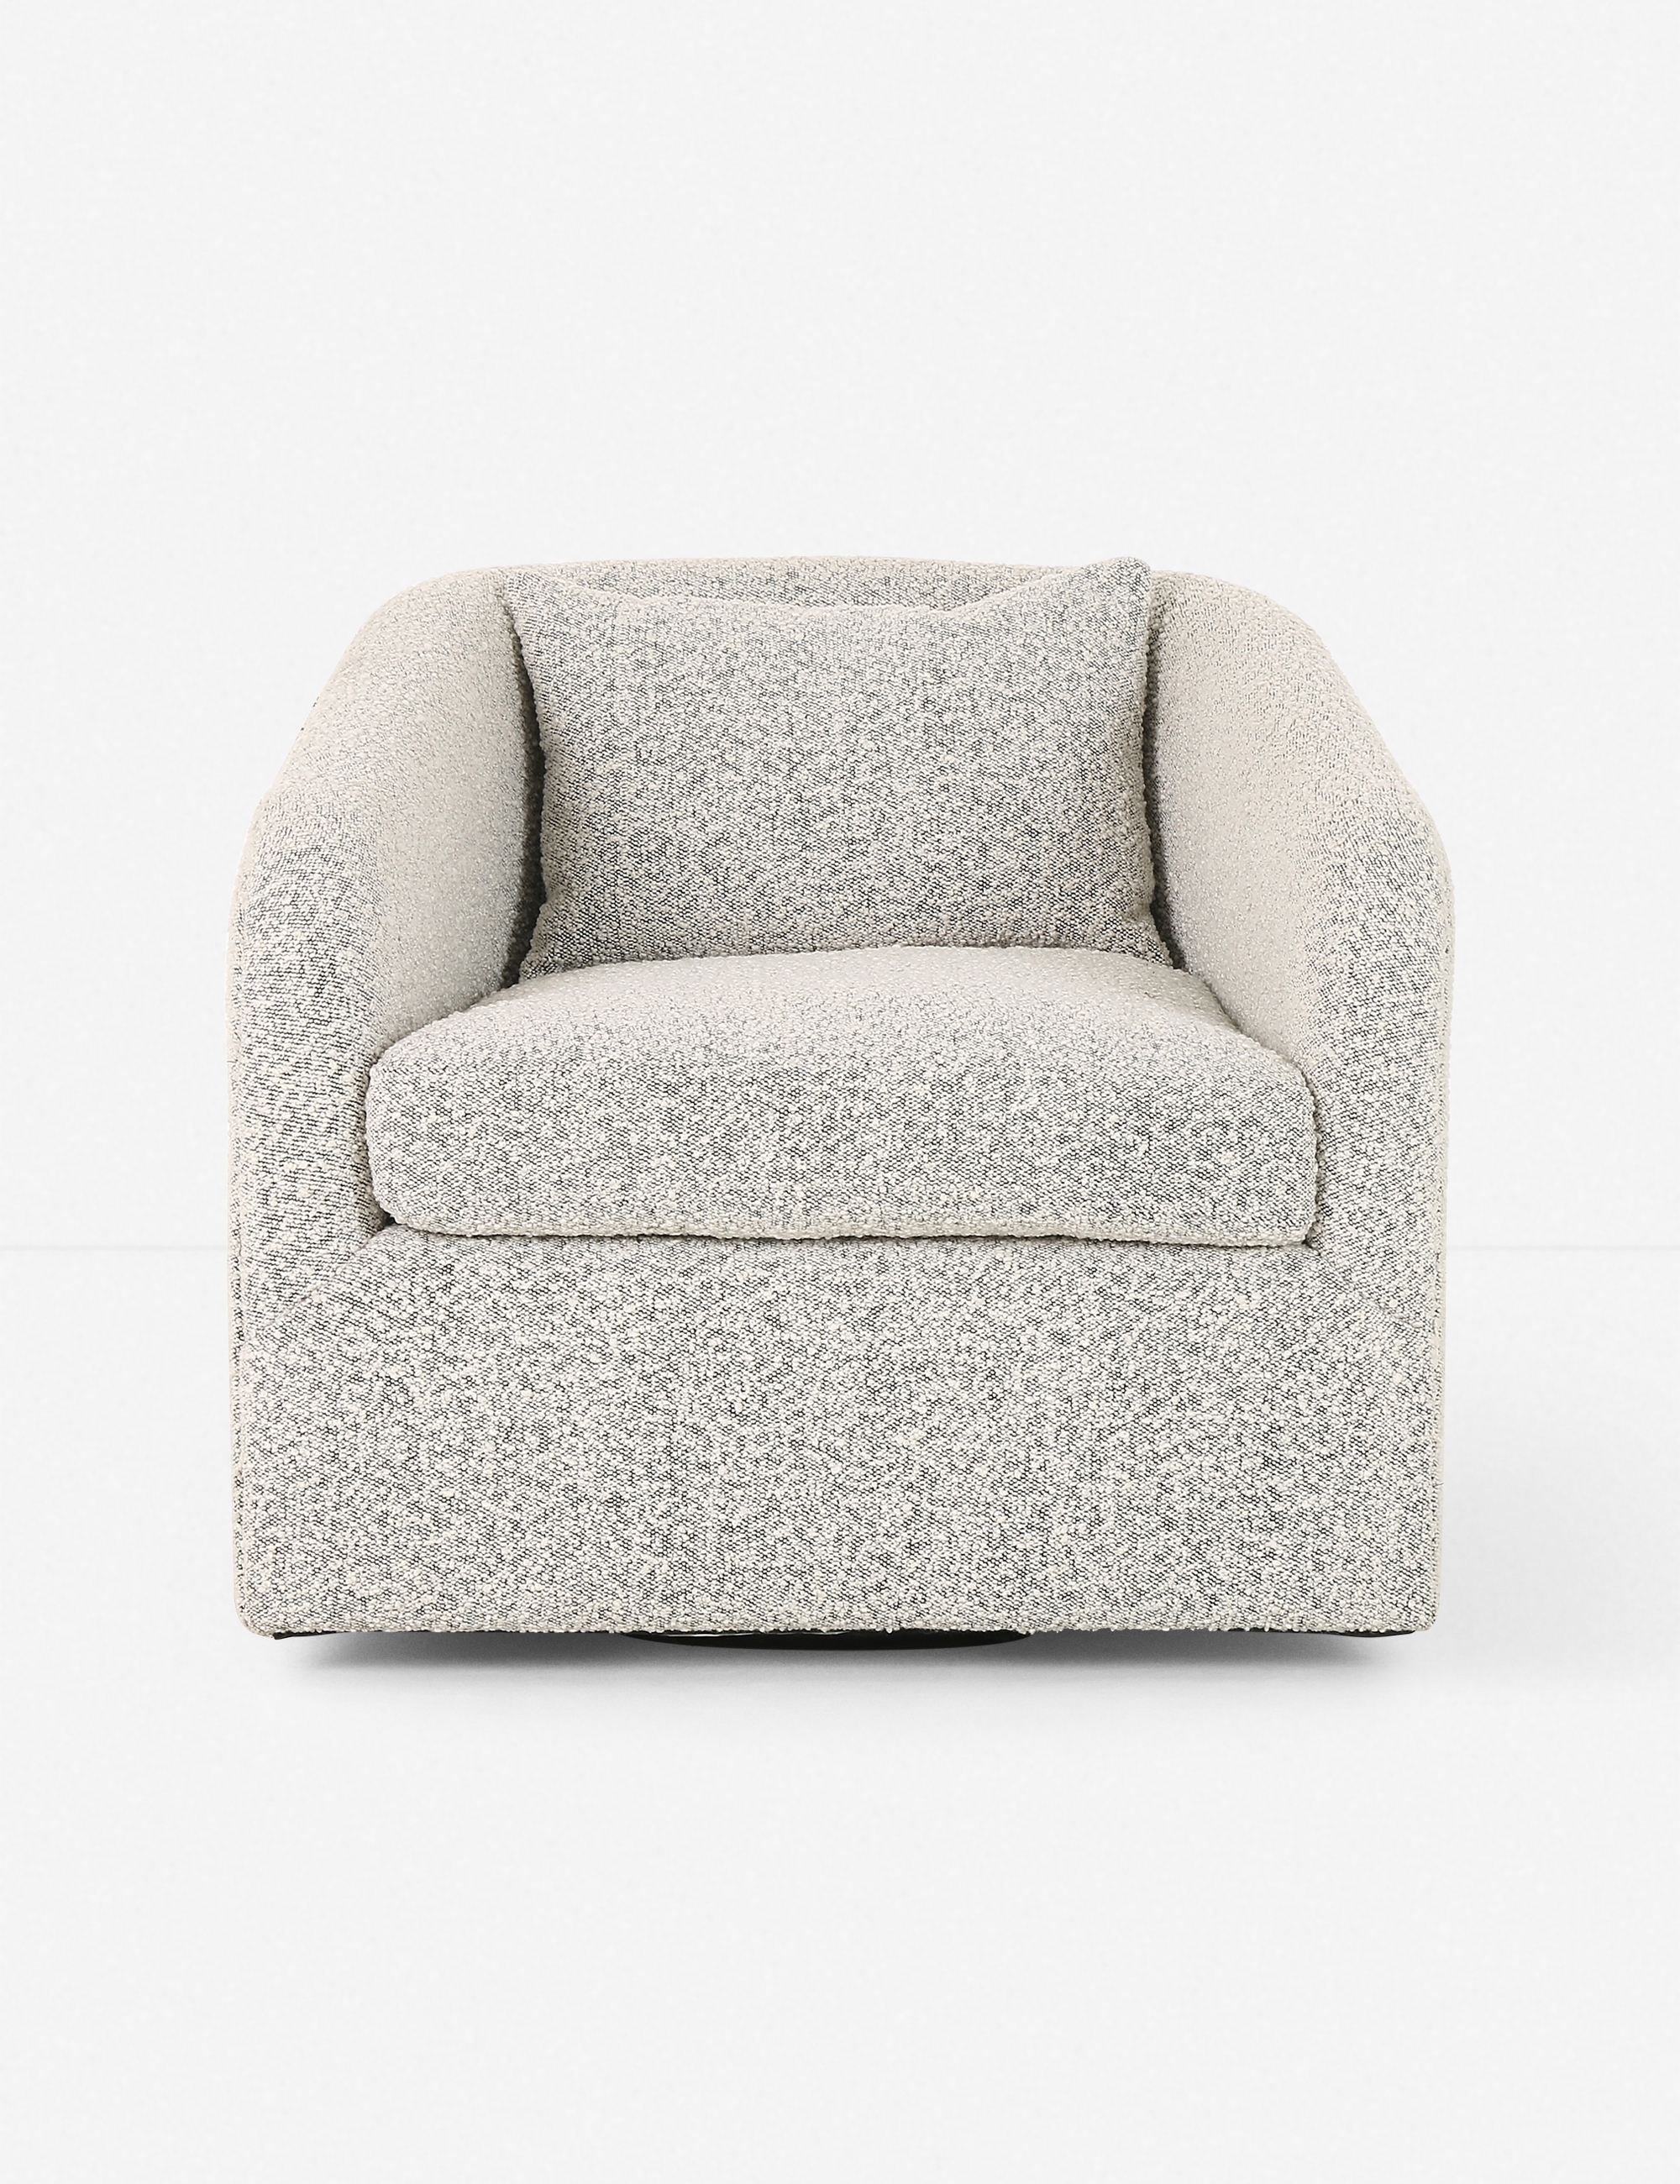 Ren Swivel Chair, Knoll Domino - Image 0